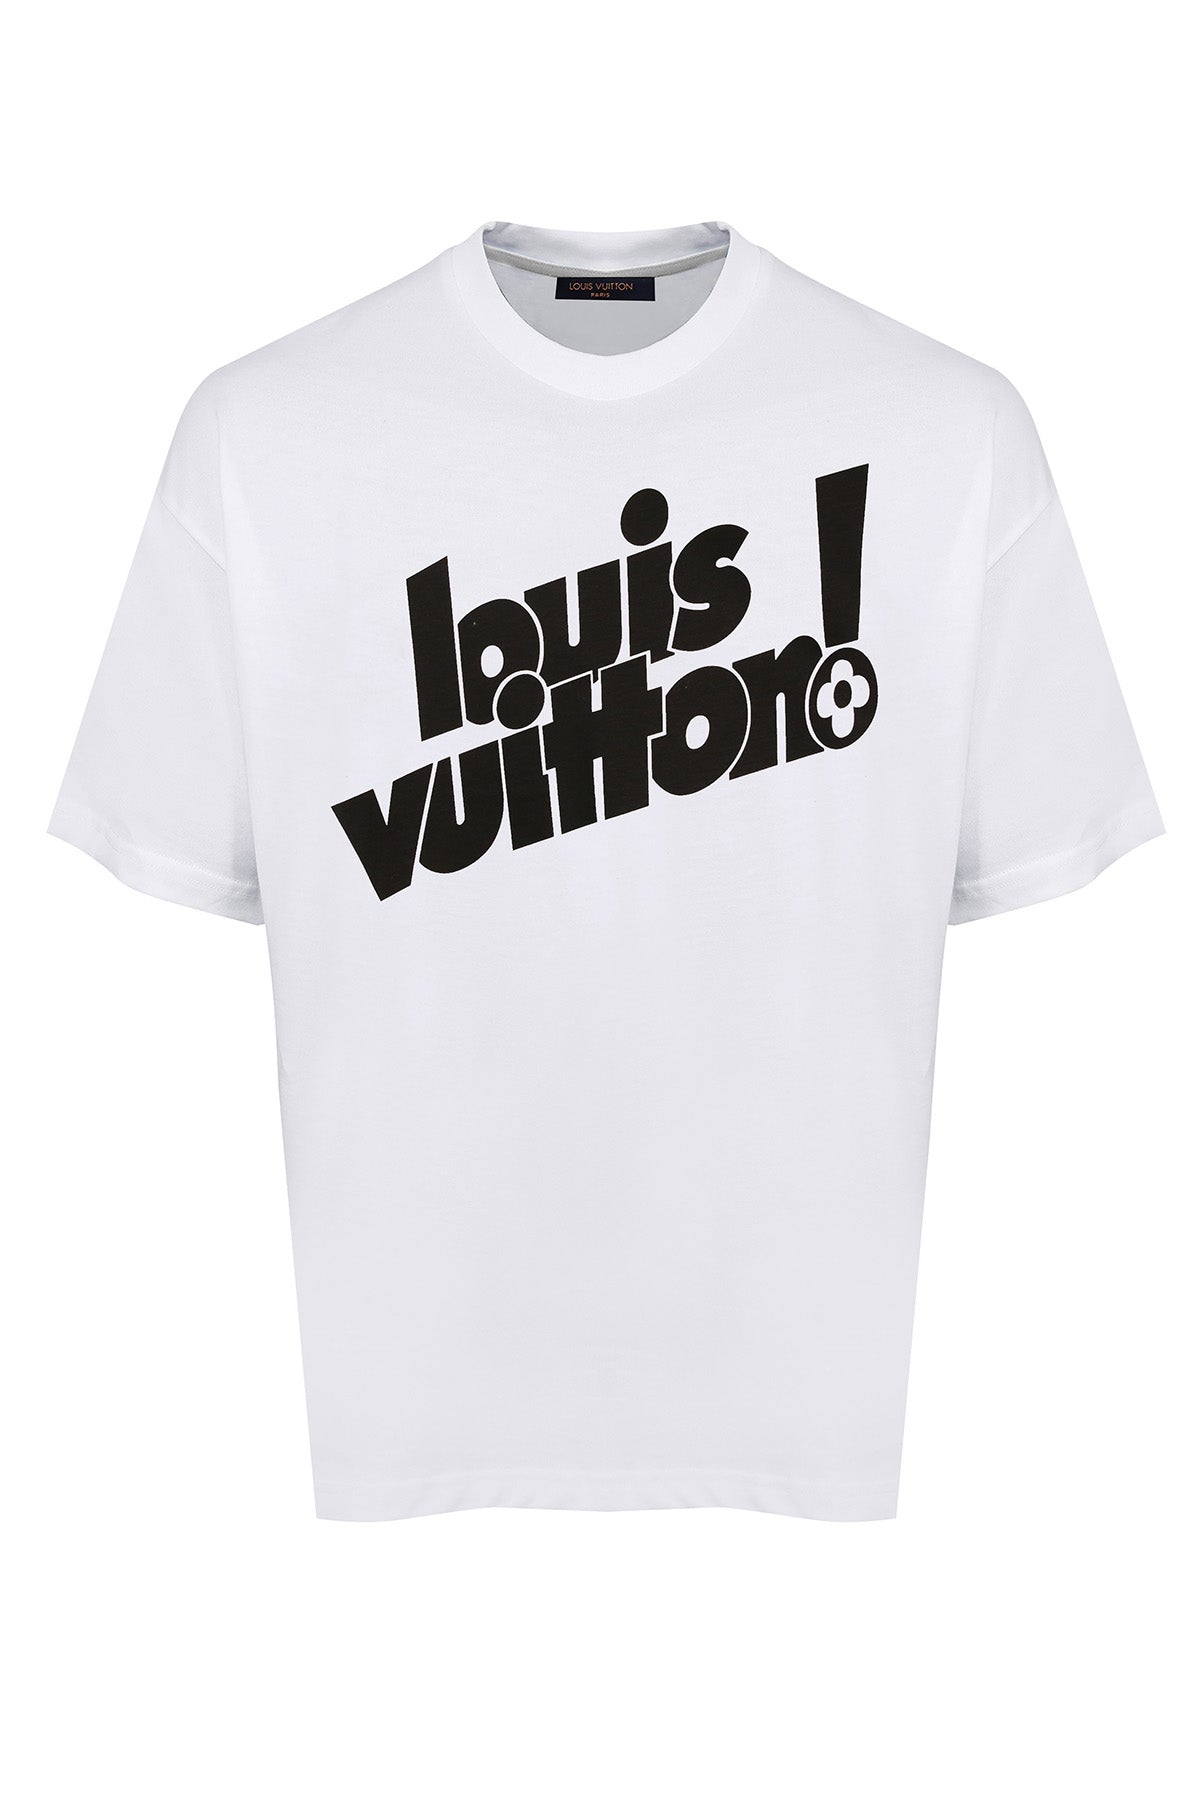 LOUIS VUITTON EVERYDAY LV CREWNECK WHITE T-SHIRT